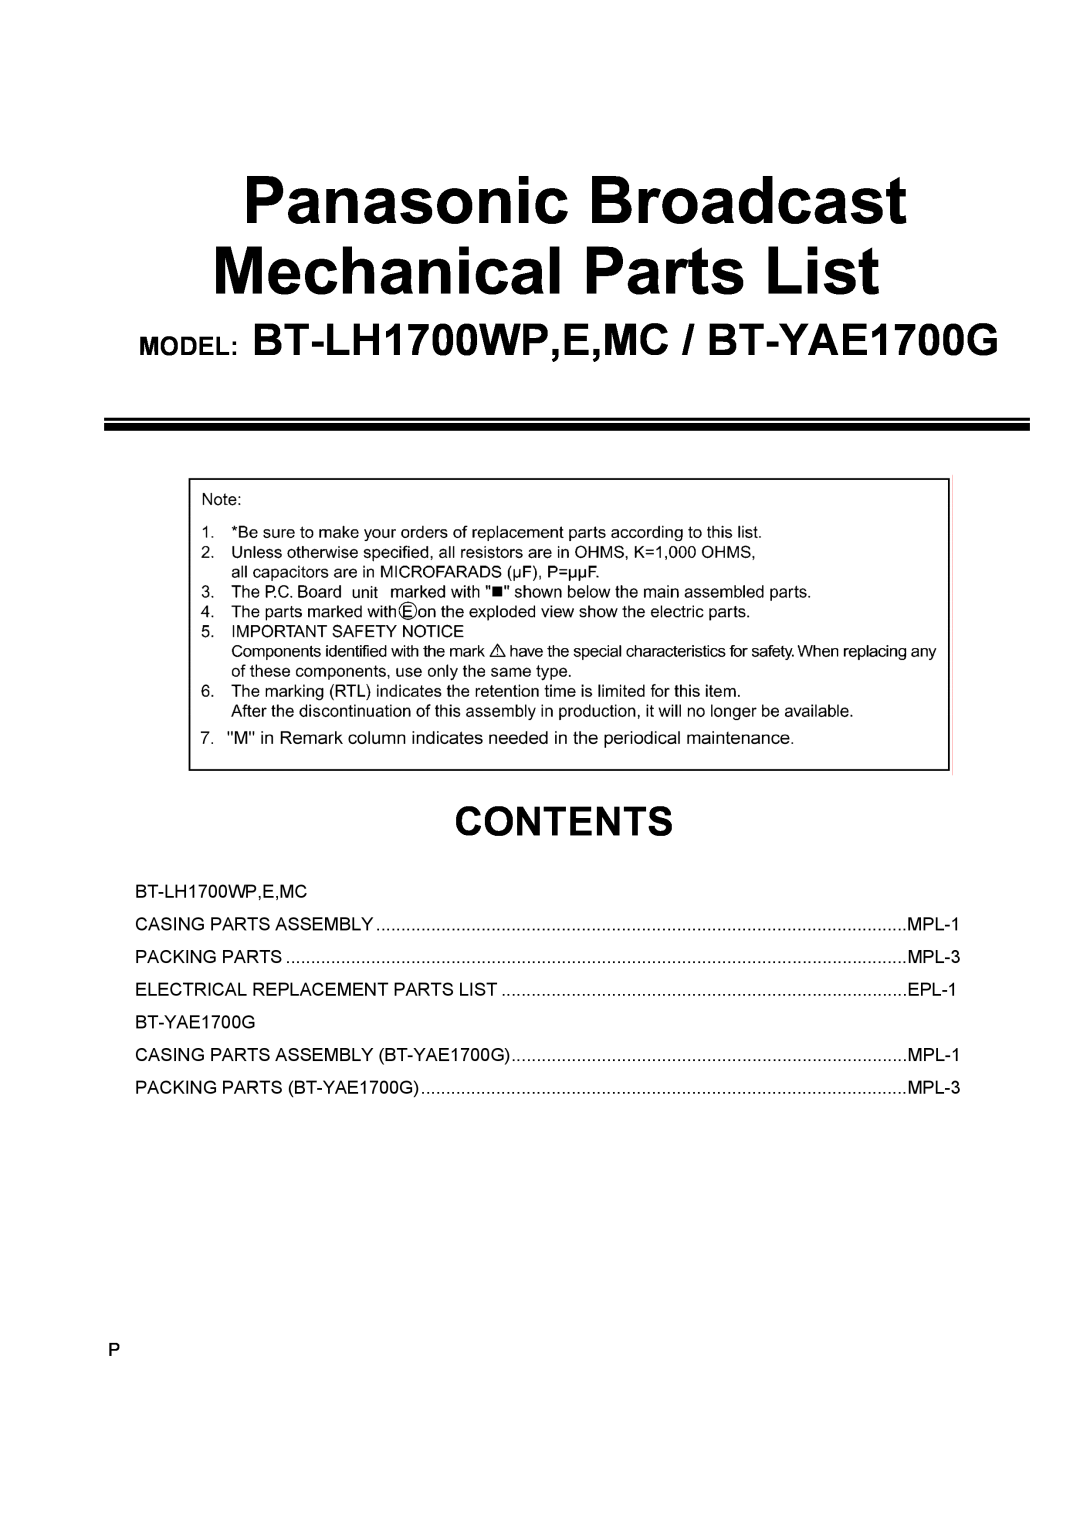 Panasonic BT-YAE1700G manual BT-LH1700WP,E,MC, MPL-1, MPL-3, EPL-1, Casing Parts Assembly, Packing Parts, Contents 